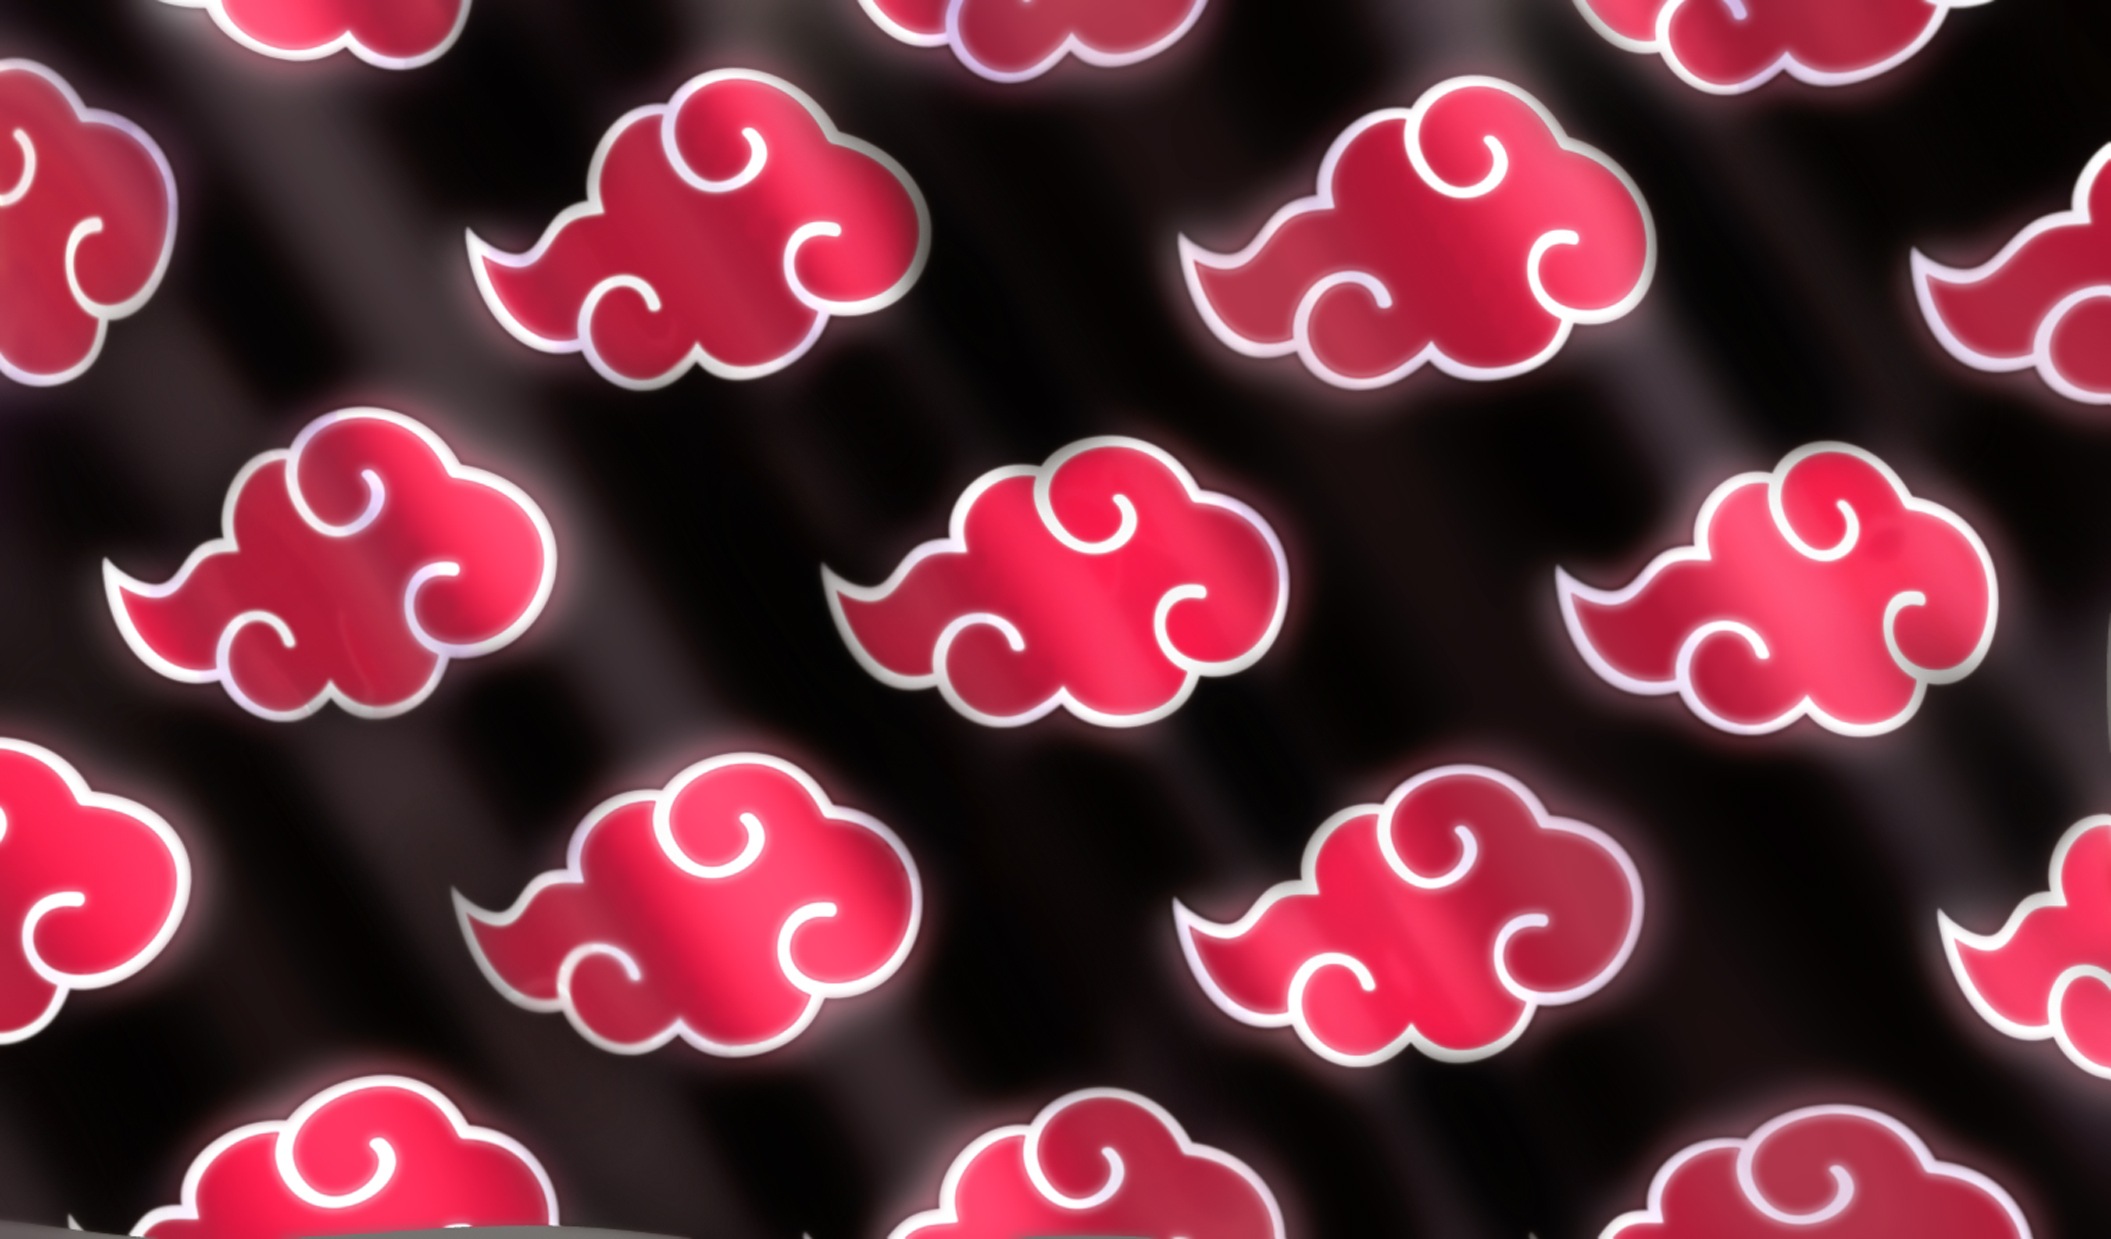  Clouds Akatsuki Enemy Flag Naruto Wallpaper 2111x1239 Full HD 2111x1239